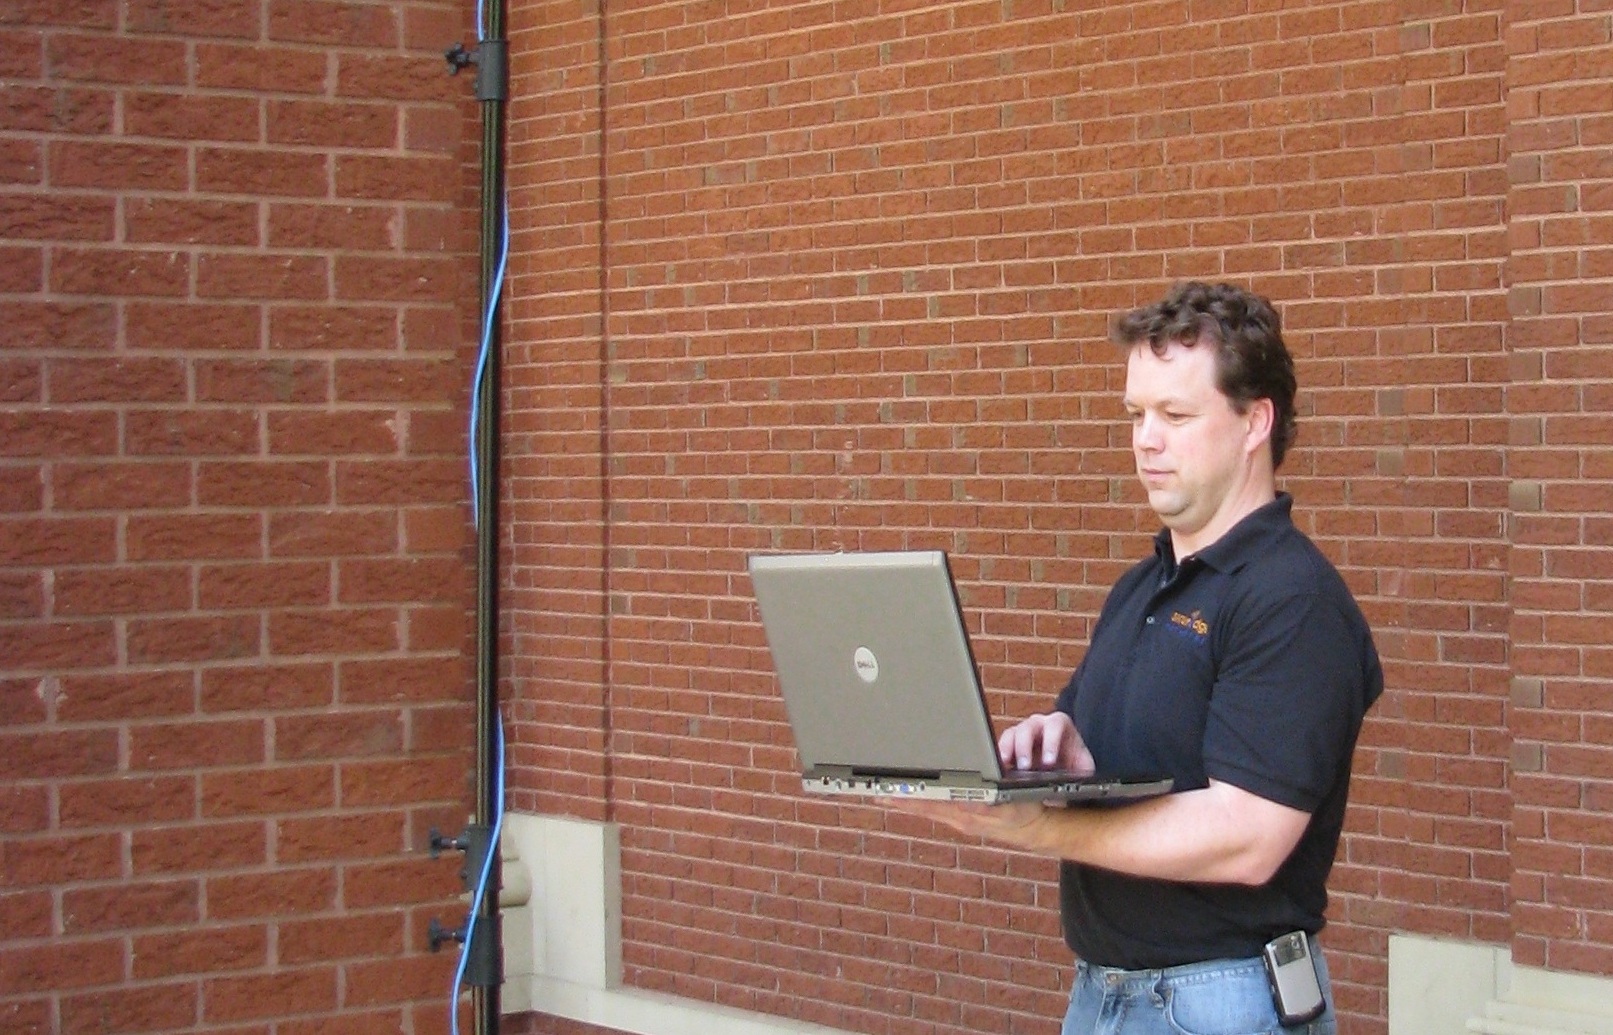 Network Engineer performing outdoor wireless survey